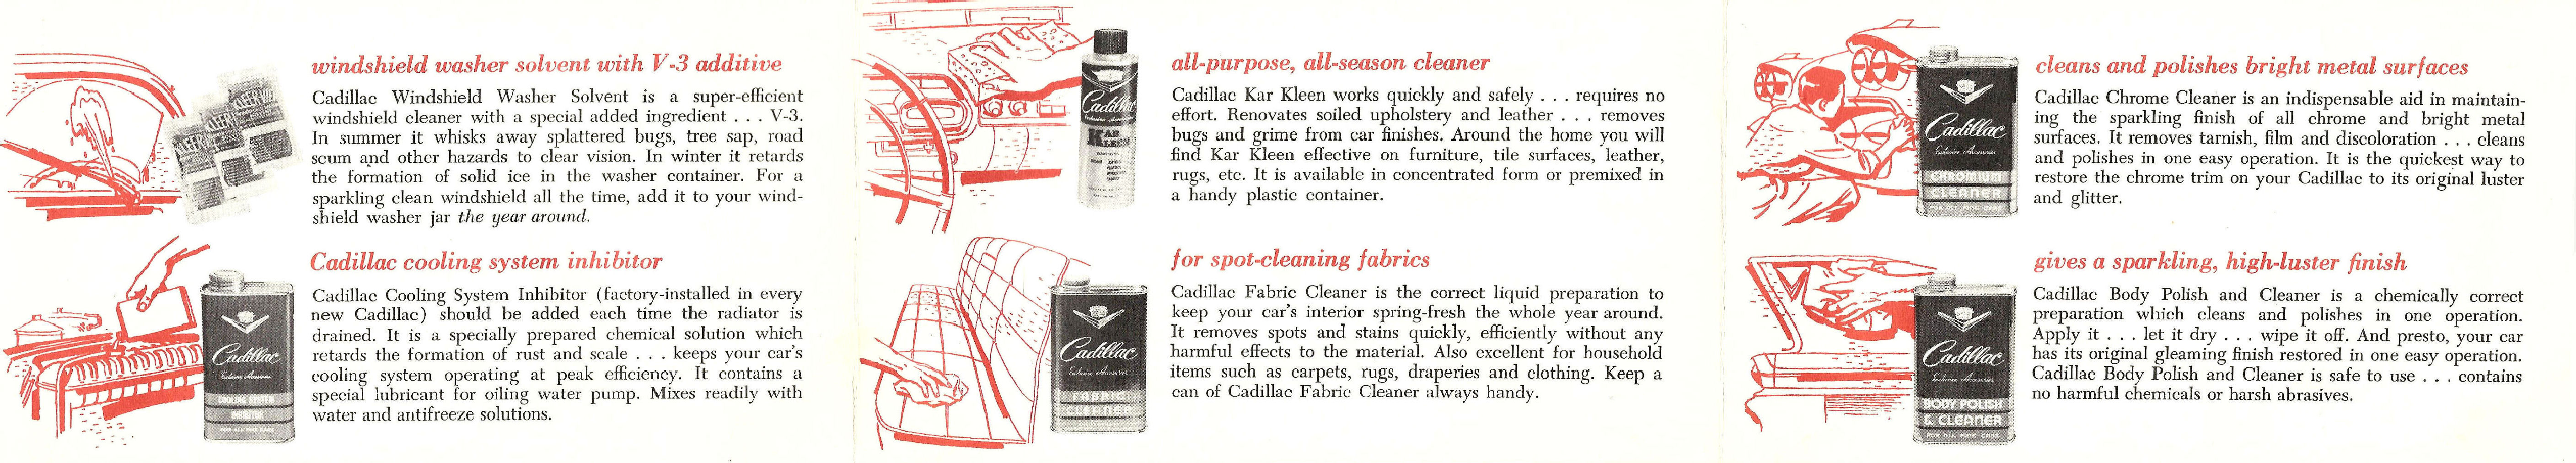 1958_Cadillac_Chemicals-Side_B